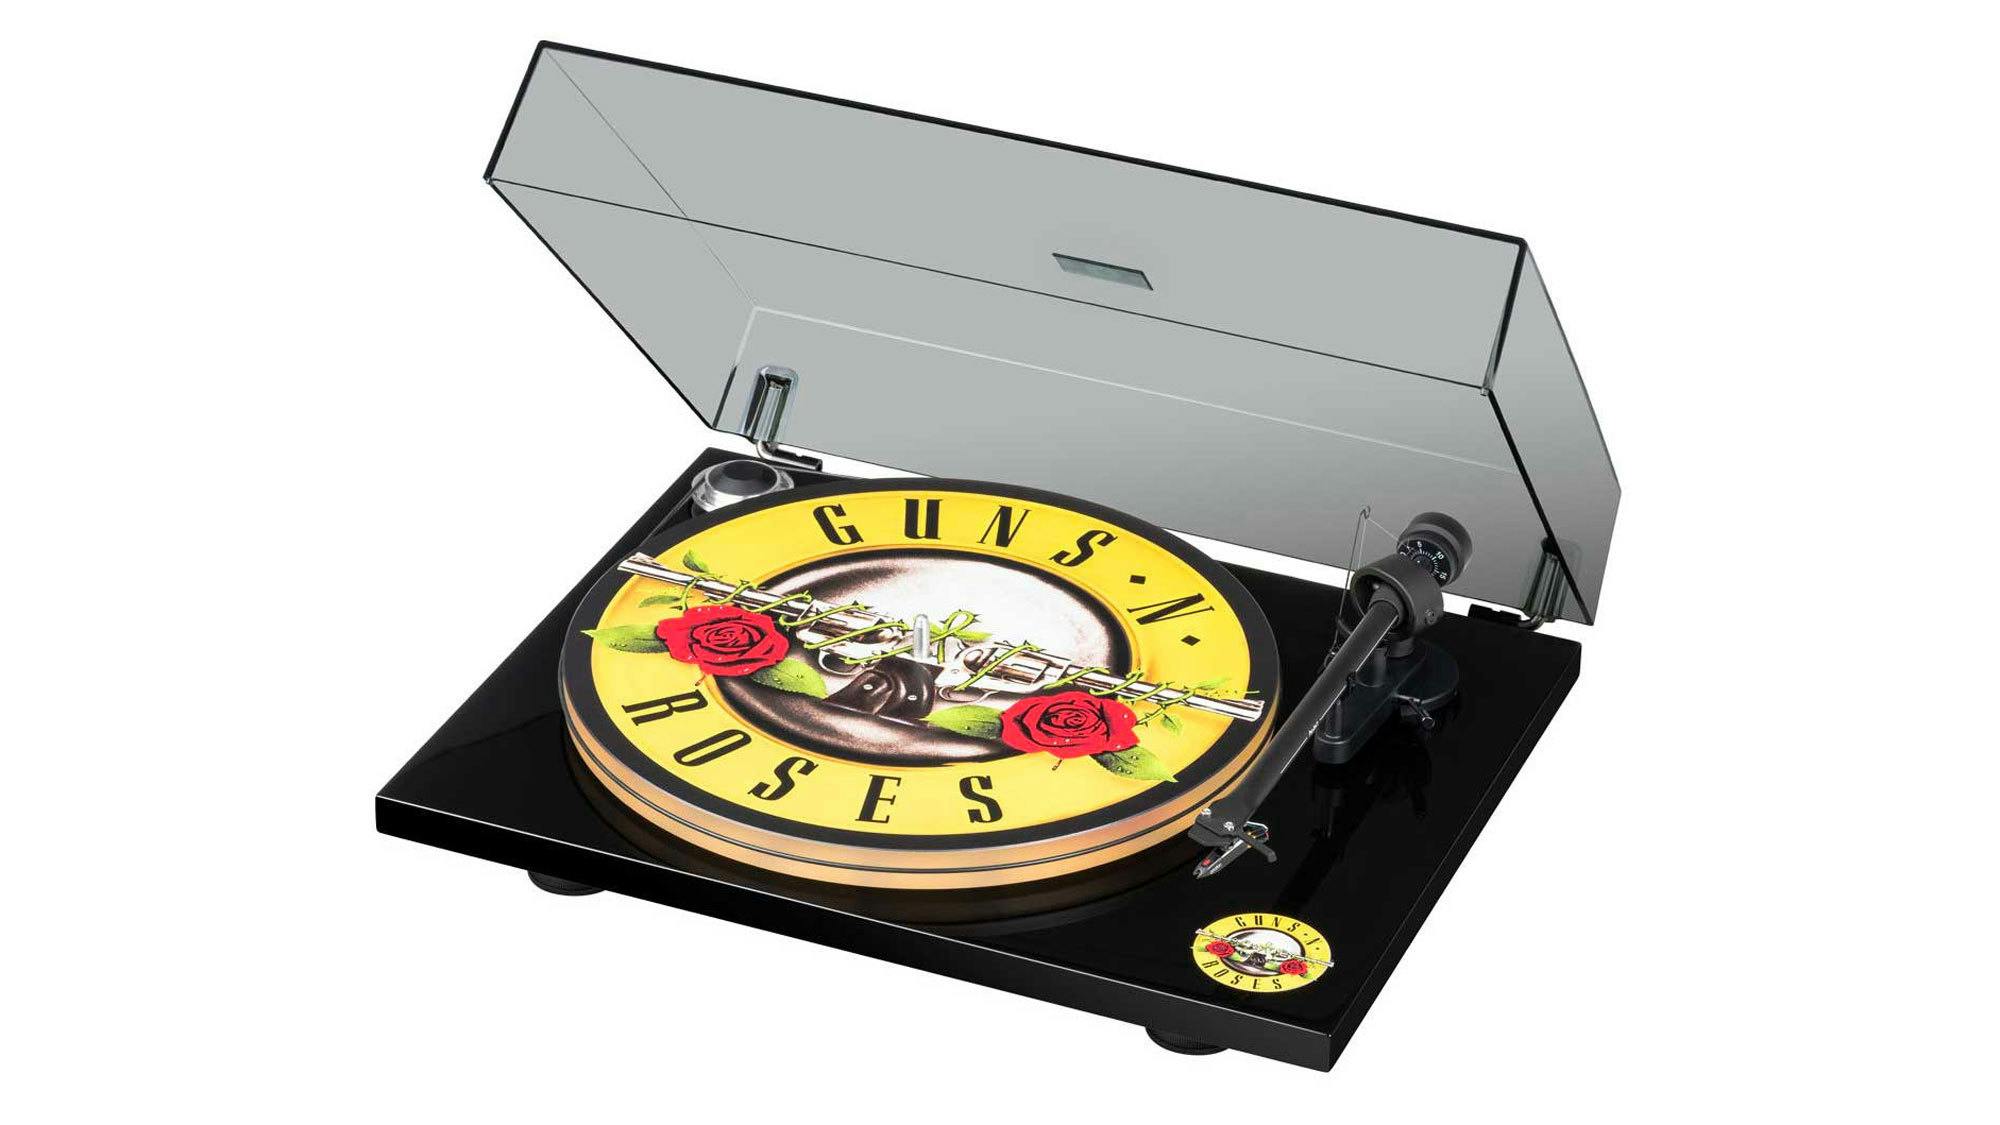 Guns N' Roses Launch Their Own Record Player